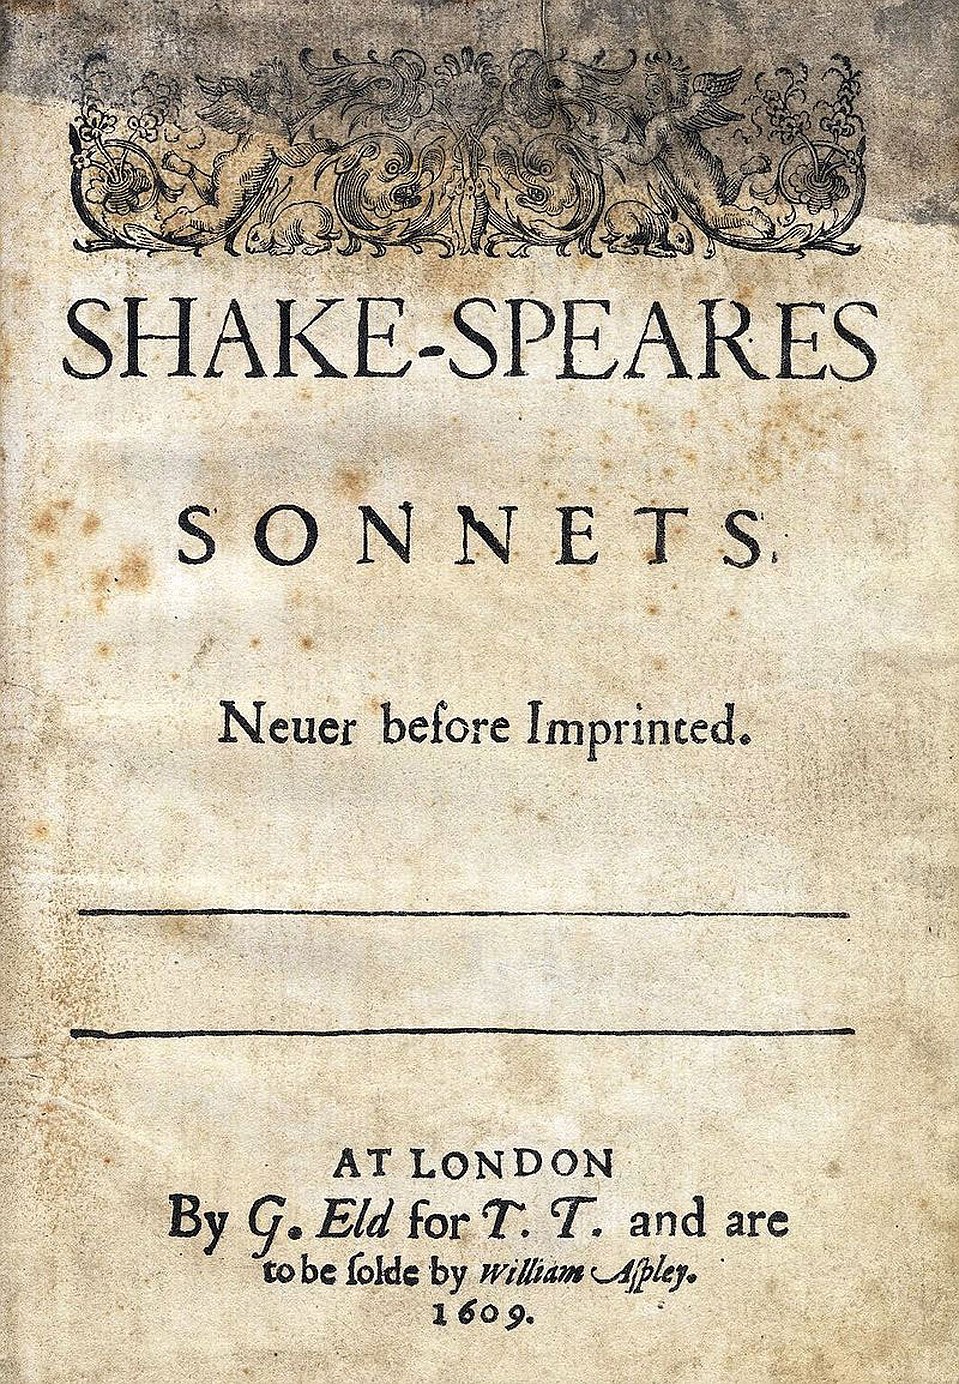 Титульная страница издания сонетов Шекспира 1609 года. Фото: ru.wikipedia.org